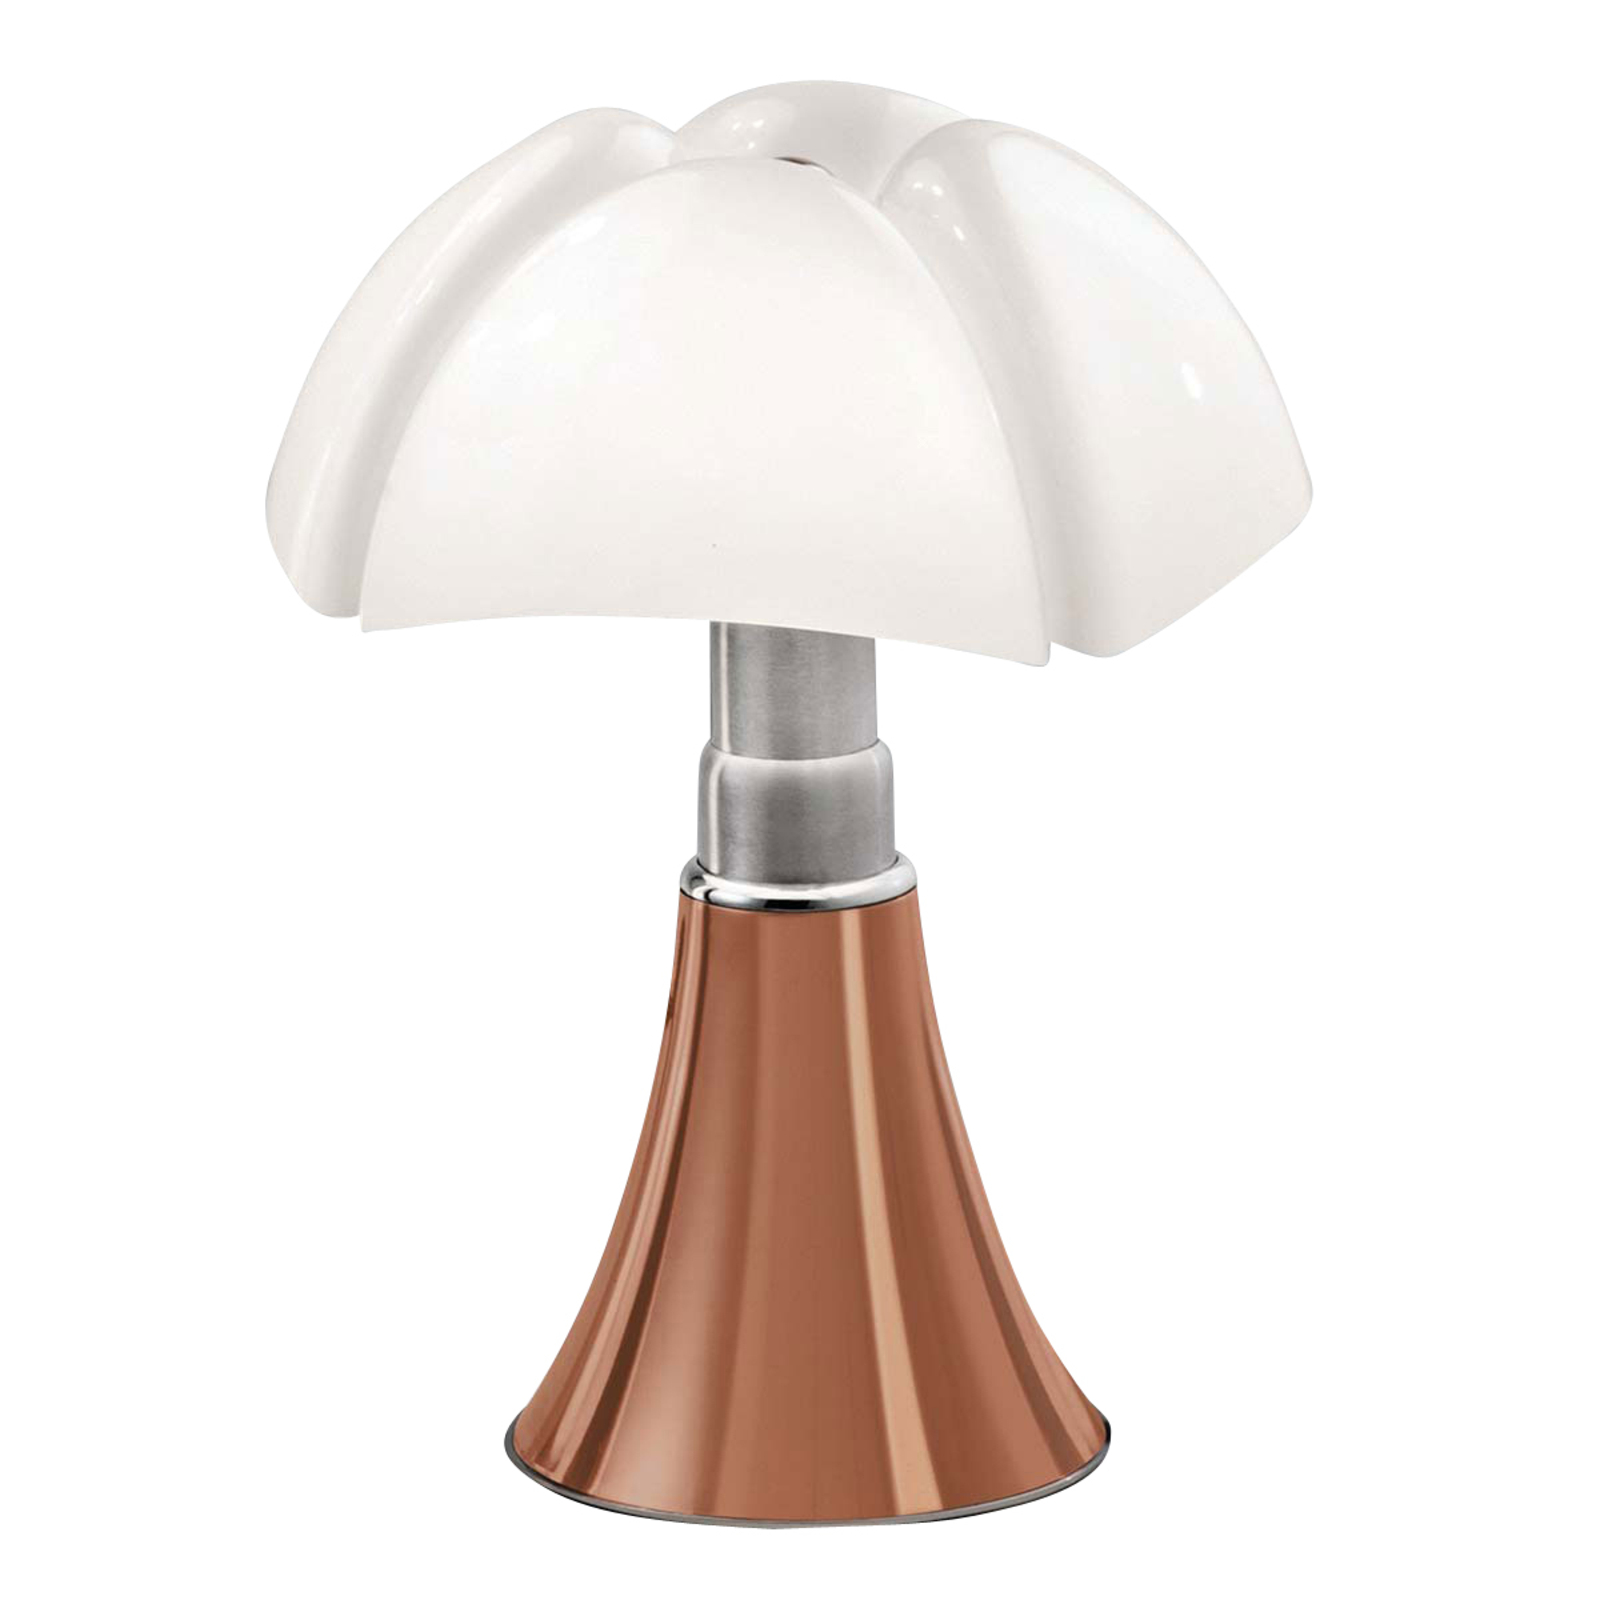 Martinelli Luce Minipipistrello lámpara de mesa de cobre